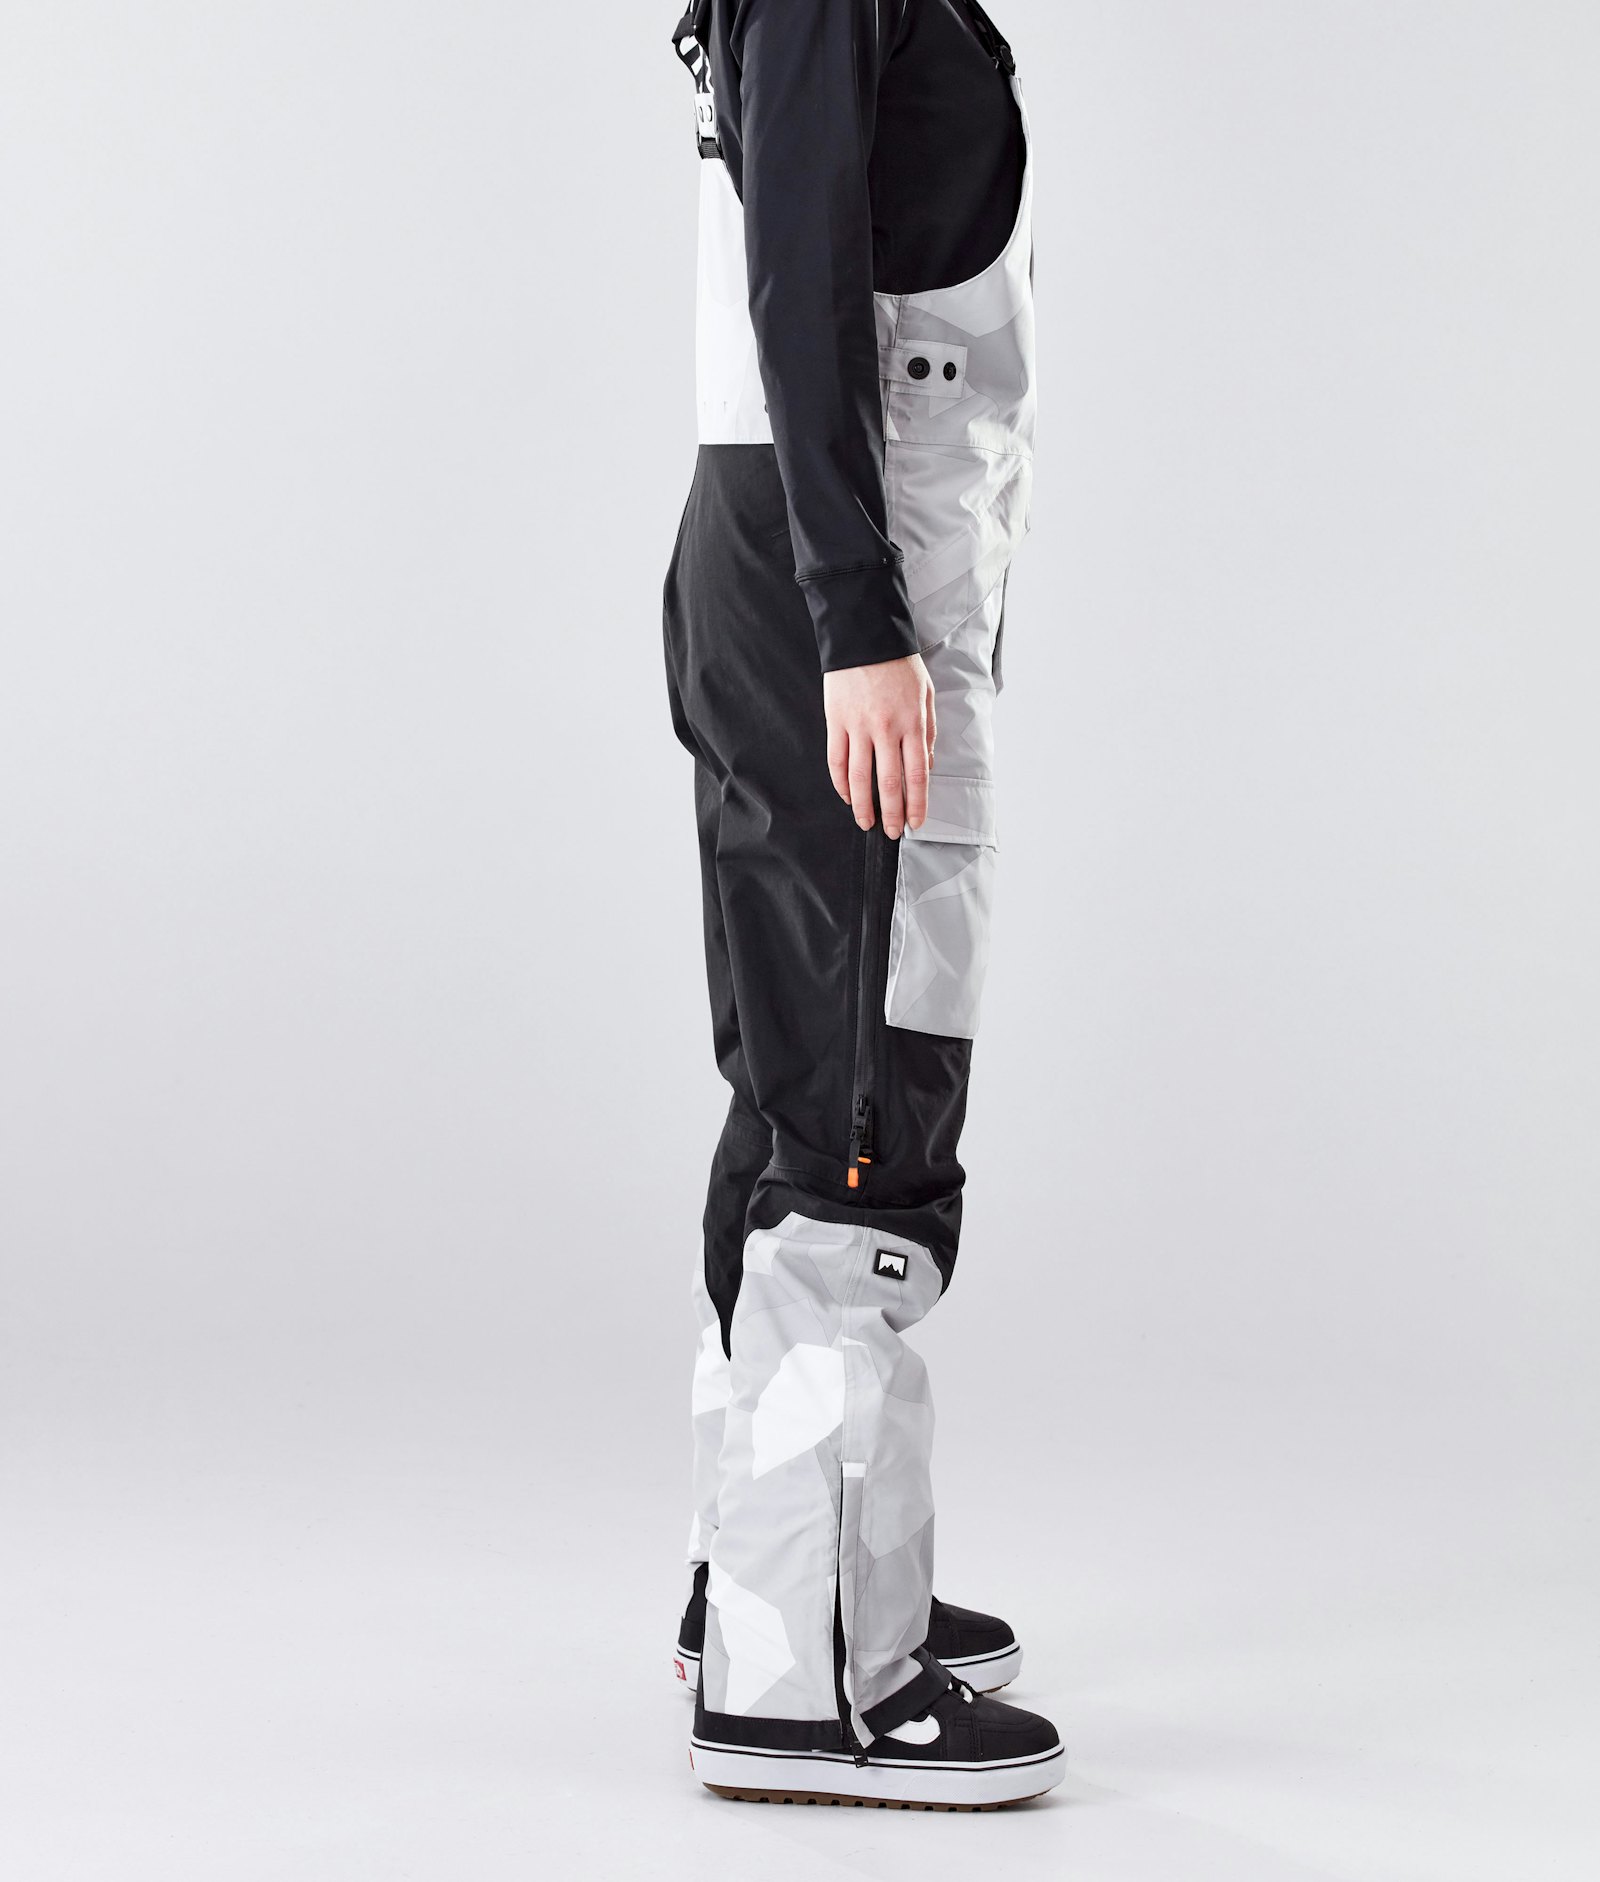 Fawk W 2020 Snowboardhose Damen Snow Camo/Black